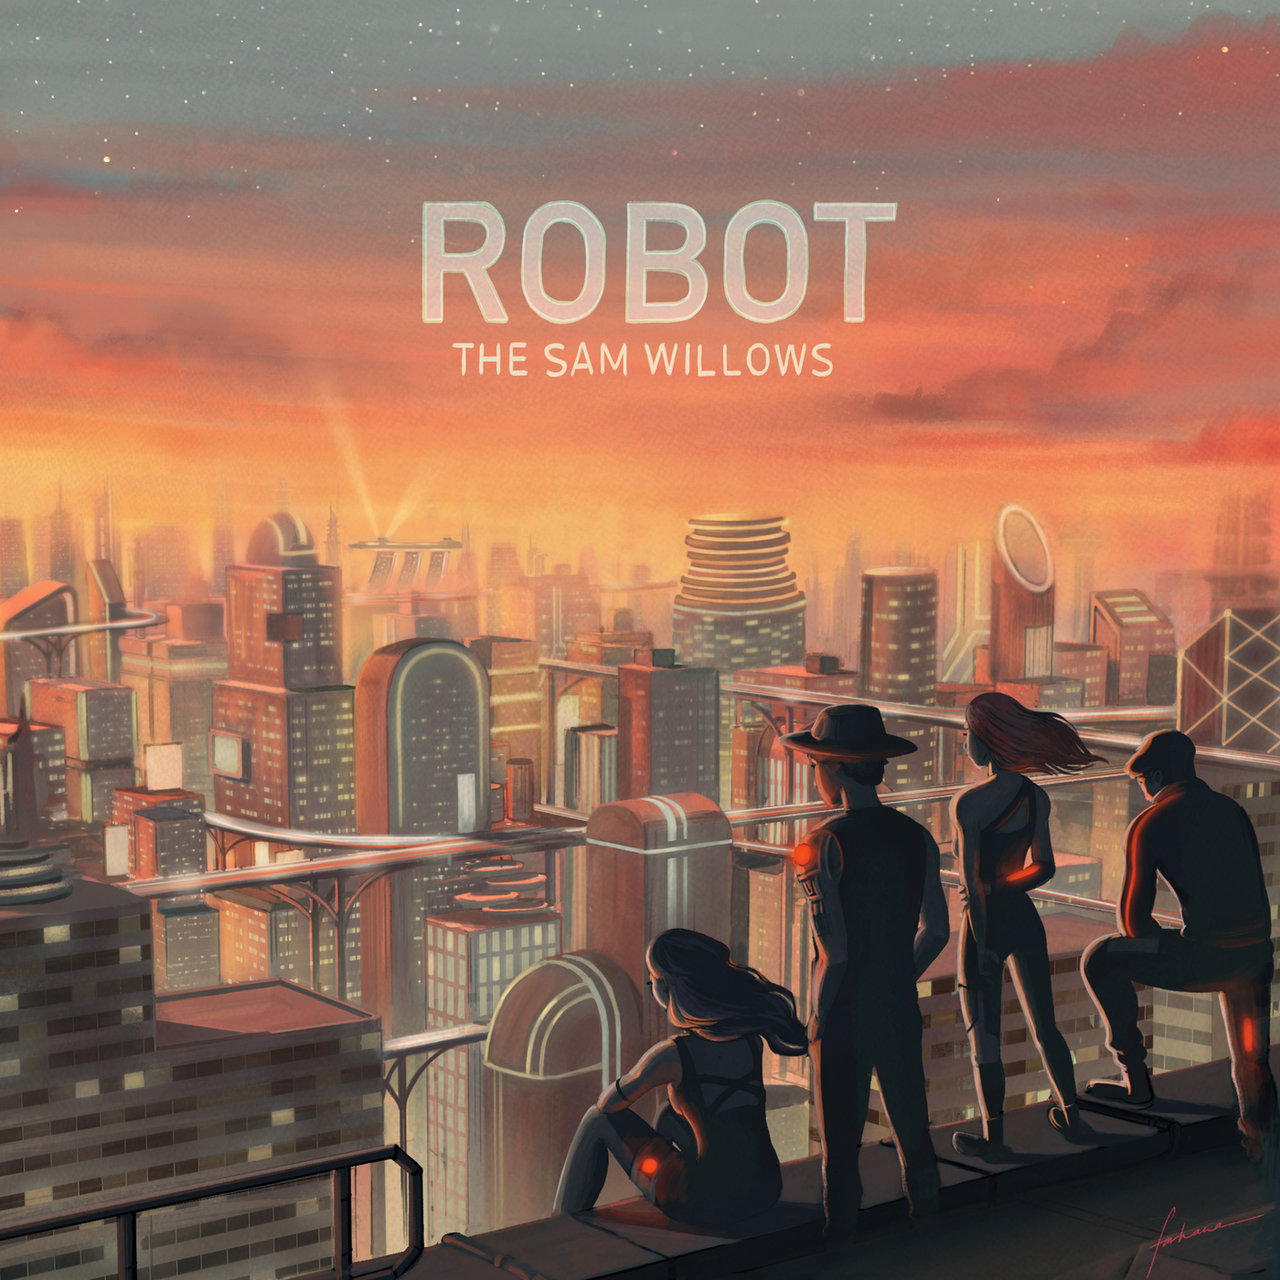 The Sam Willows Robot cover artwork